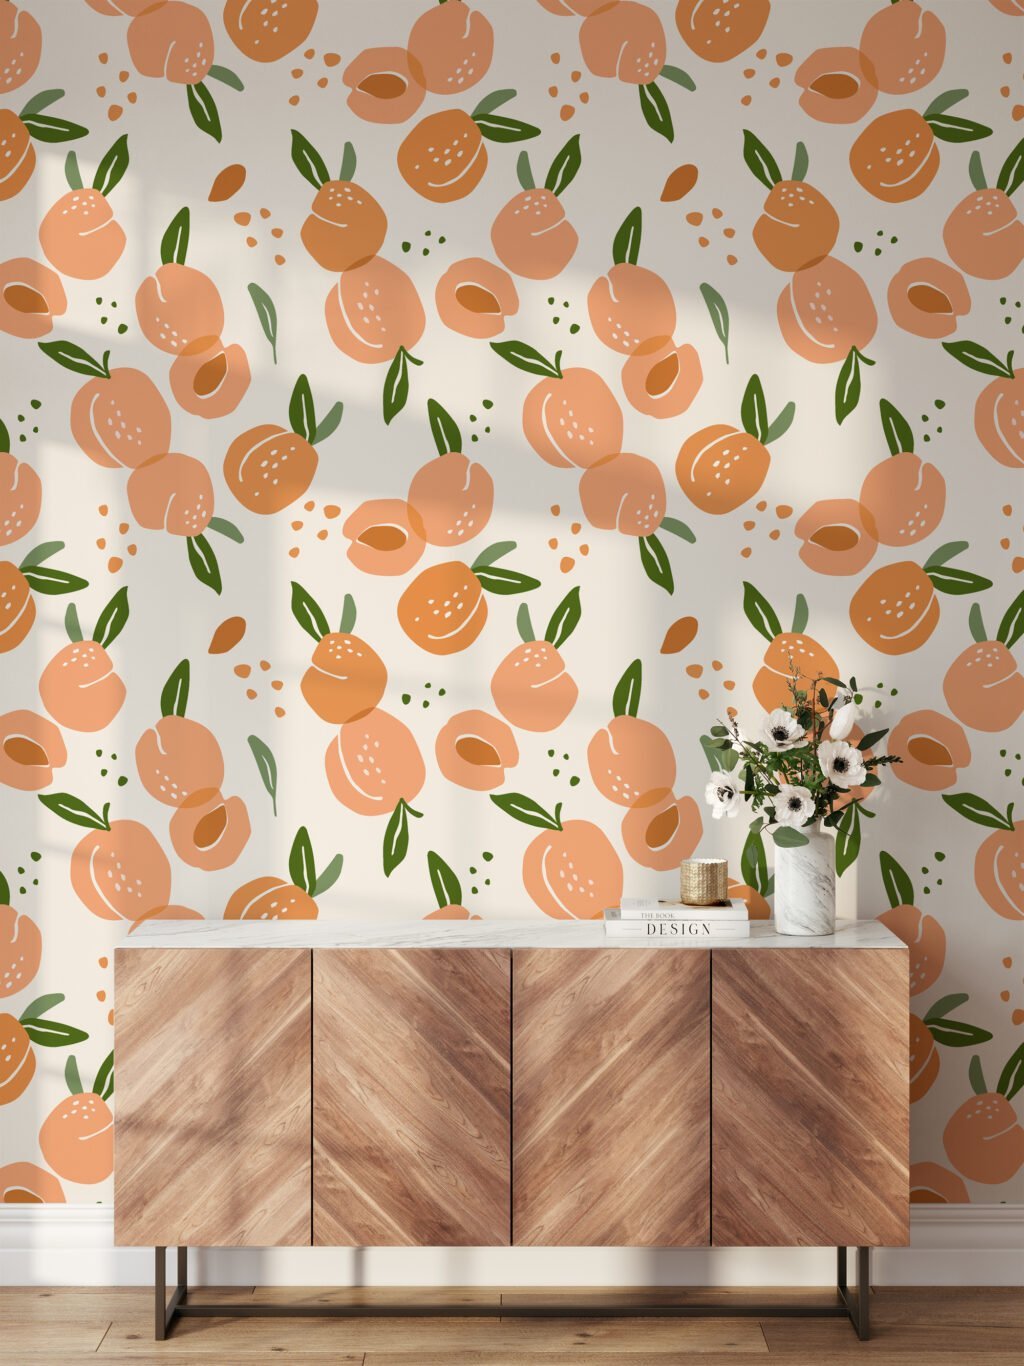 Flat Art Peaches Pattern Illustration Wallpaper, Sweet Apricot Orchard Peel & Stick Wall Mural